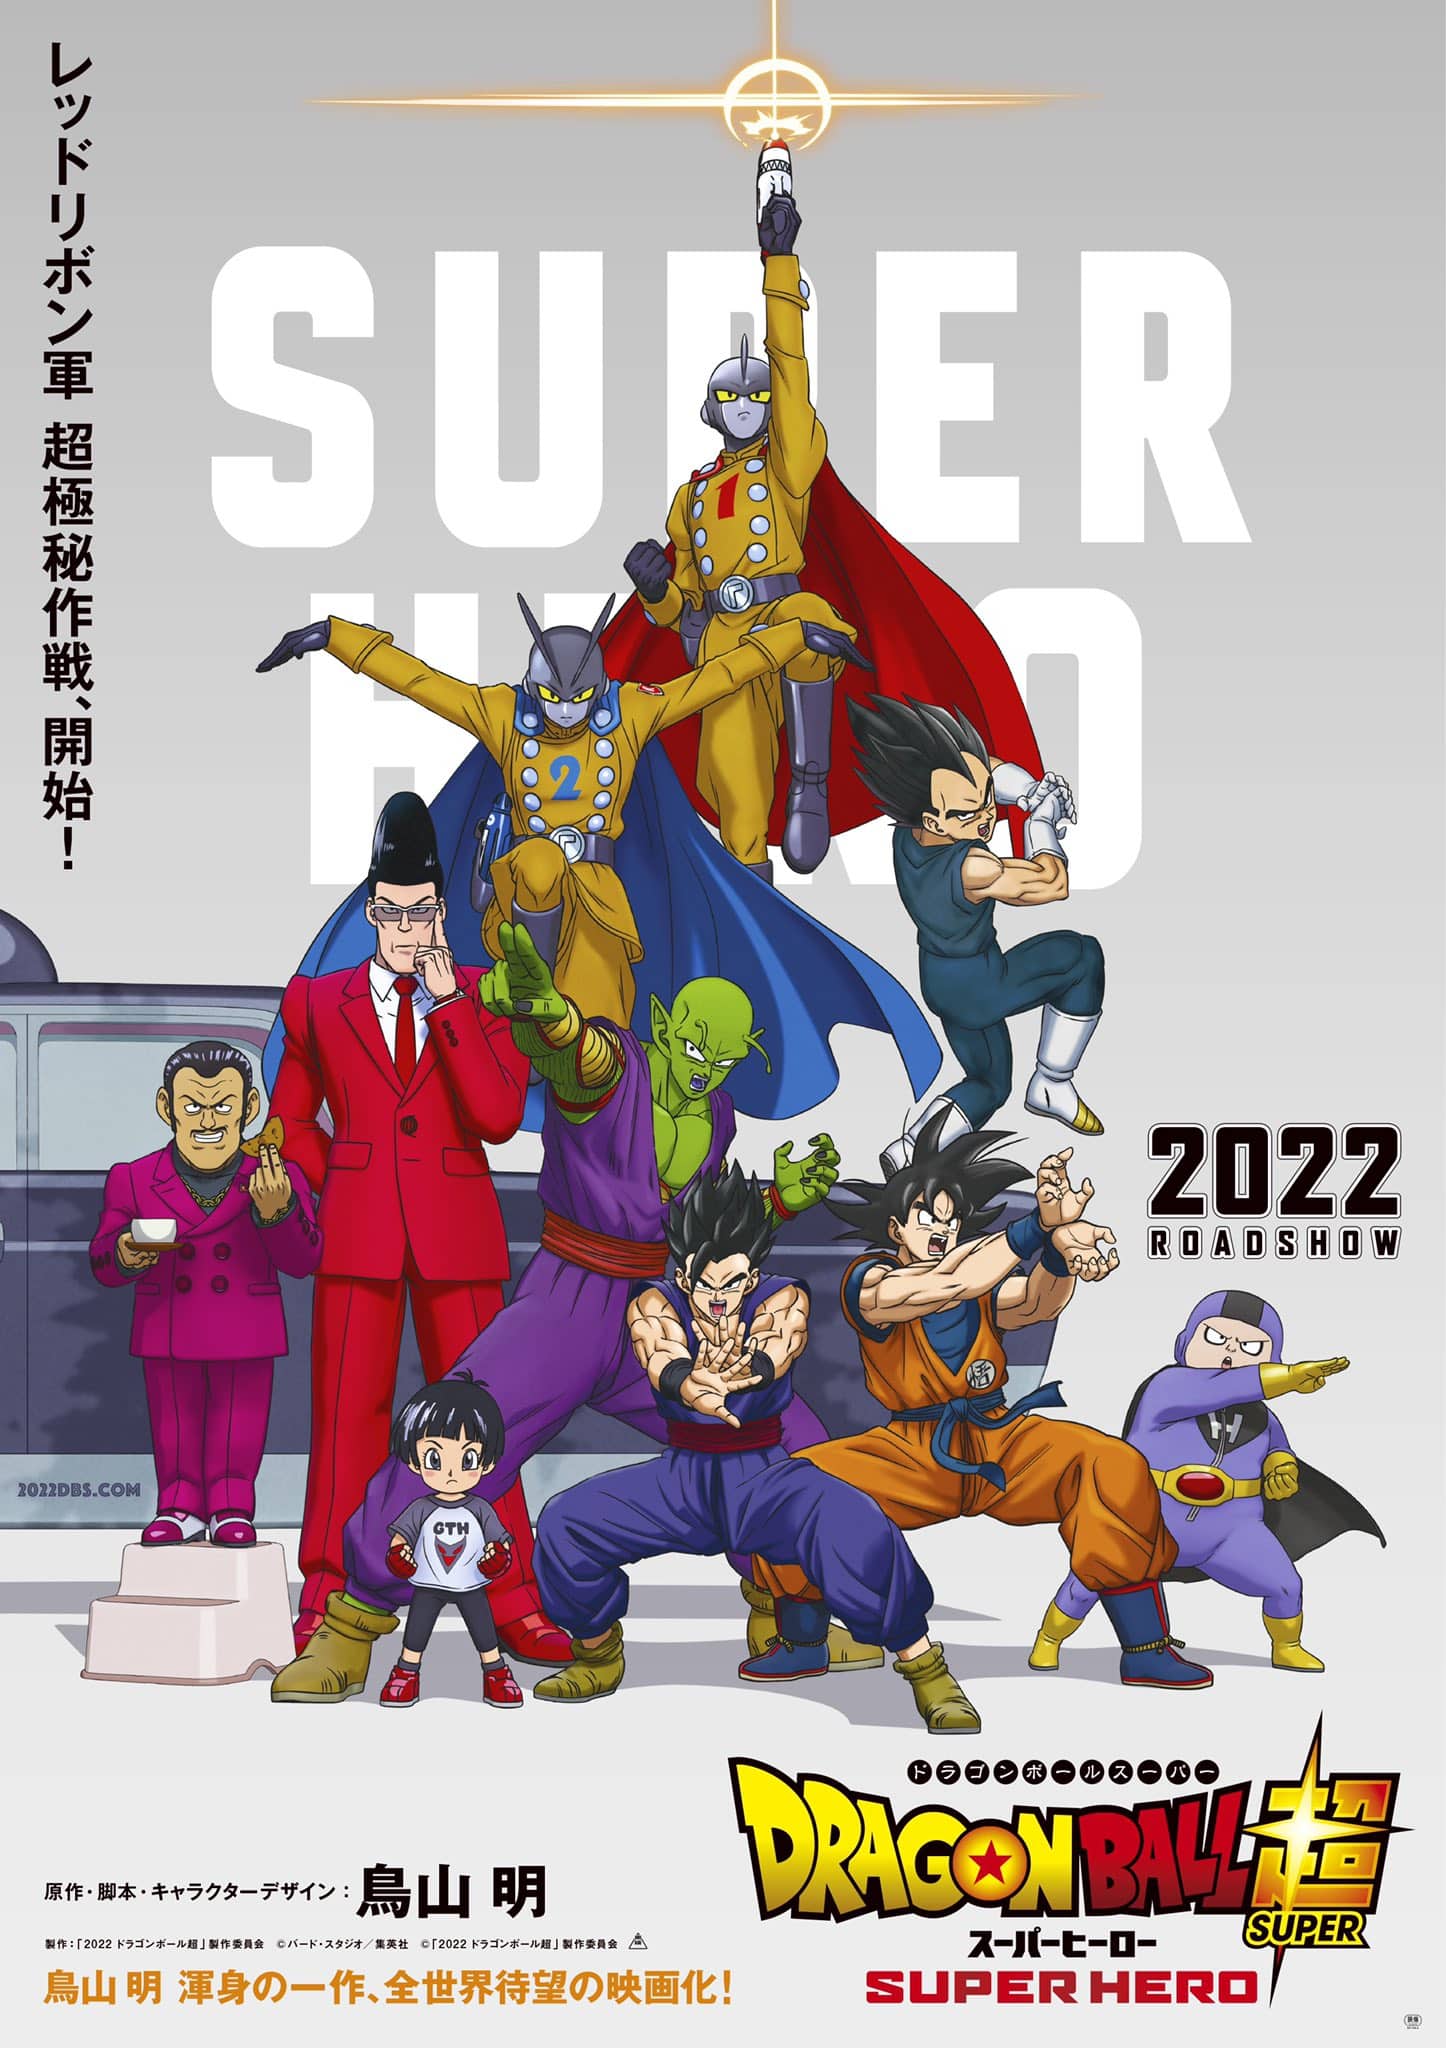 Annonce de la date de sortie du film Dragon Ball Super : SUPER HERO